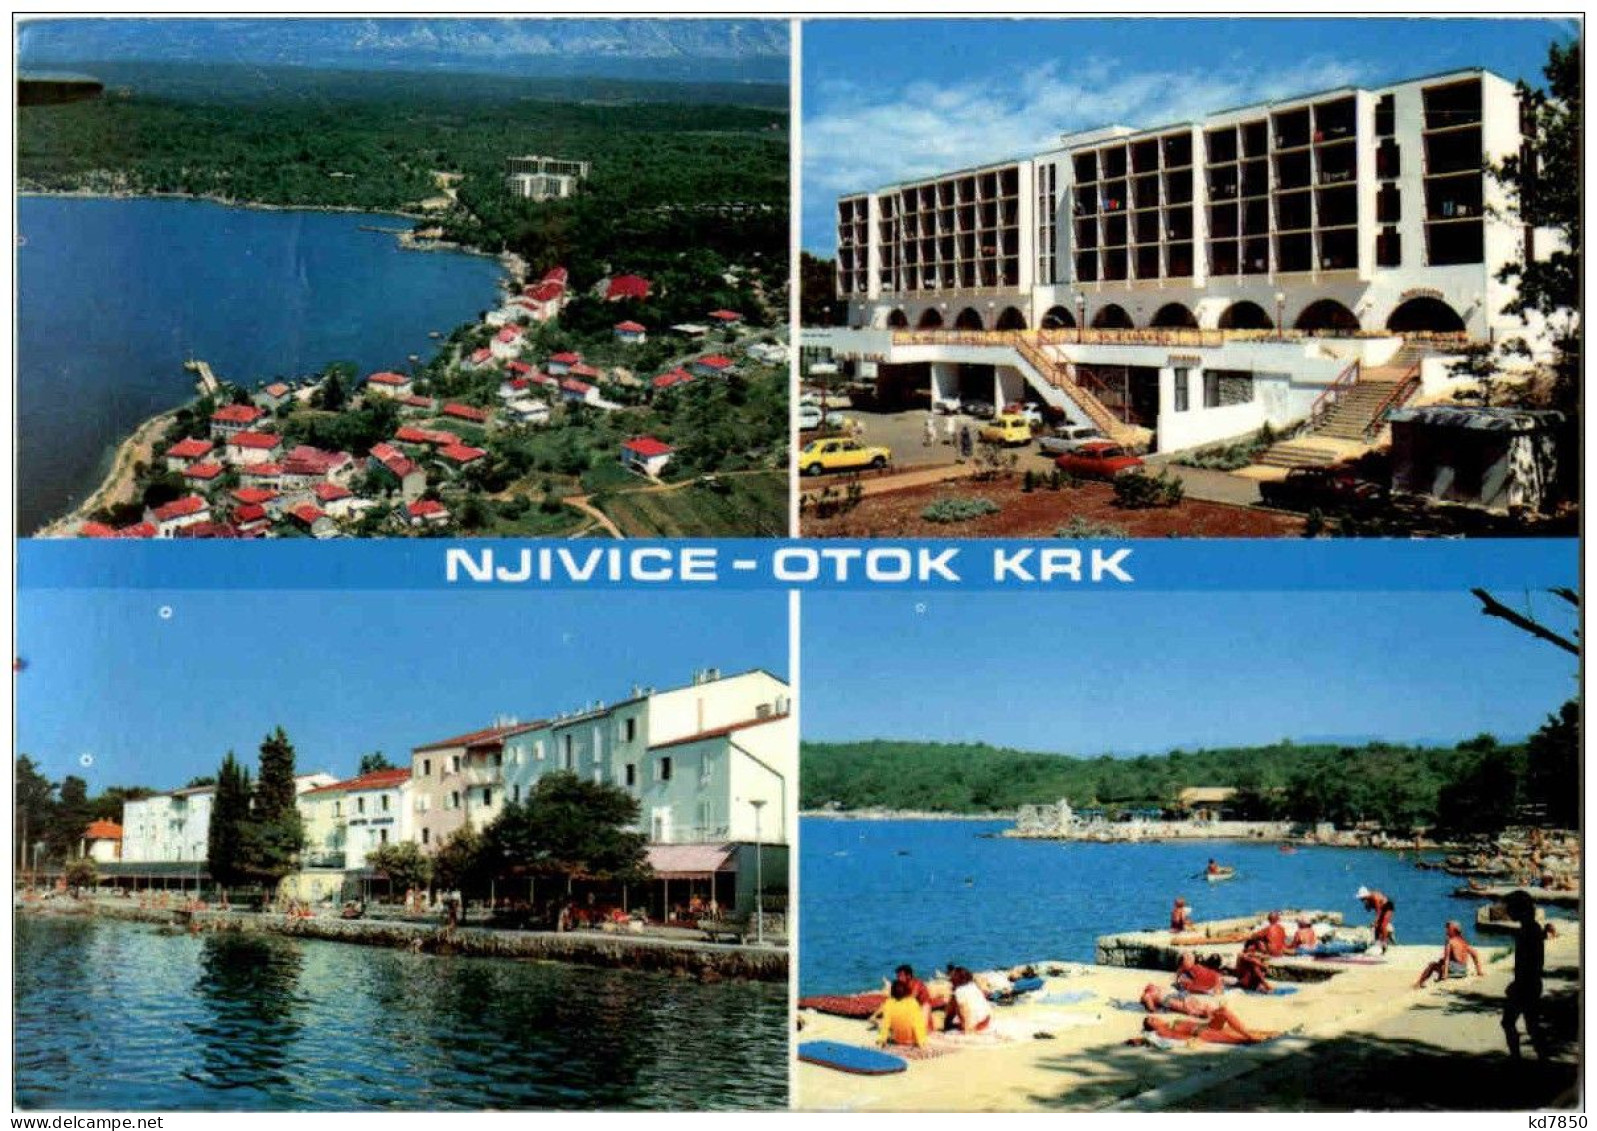 Njivice - Otok Krk - Croatie